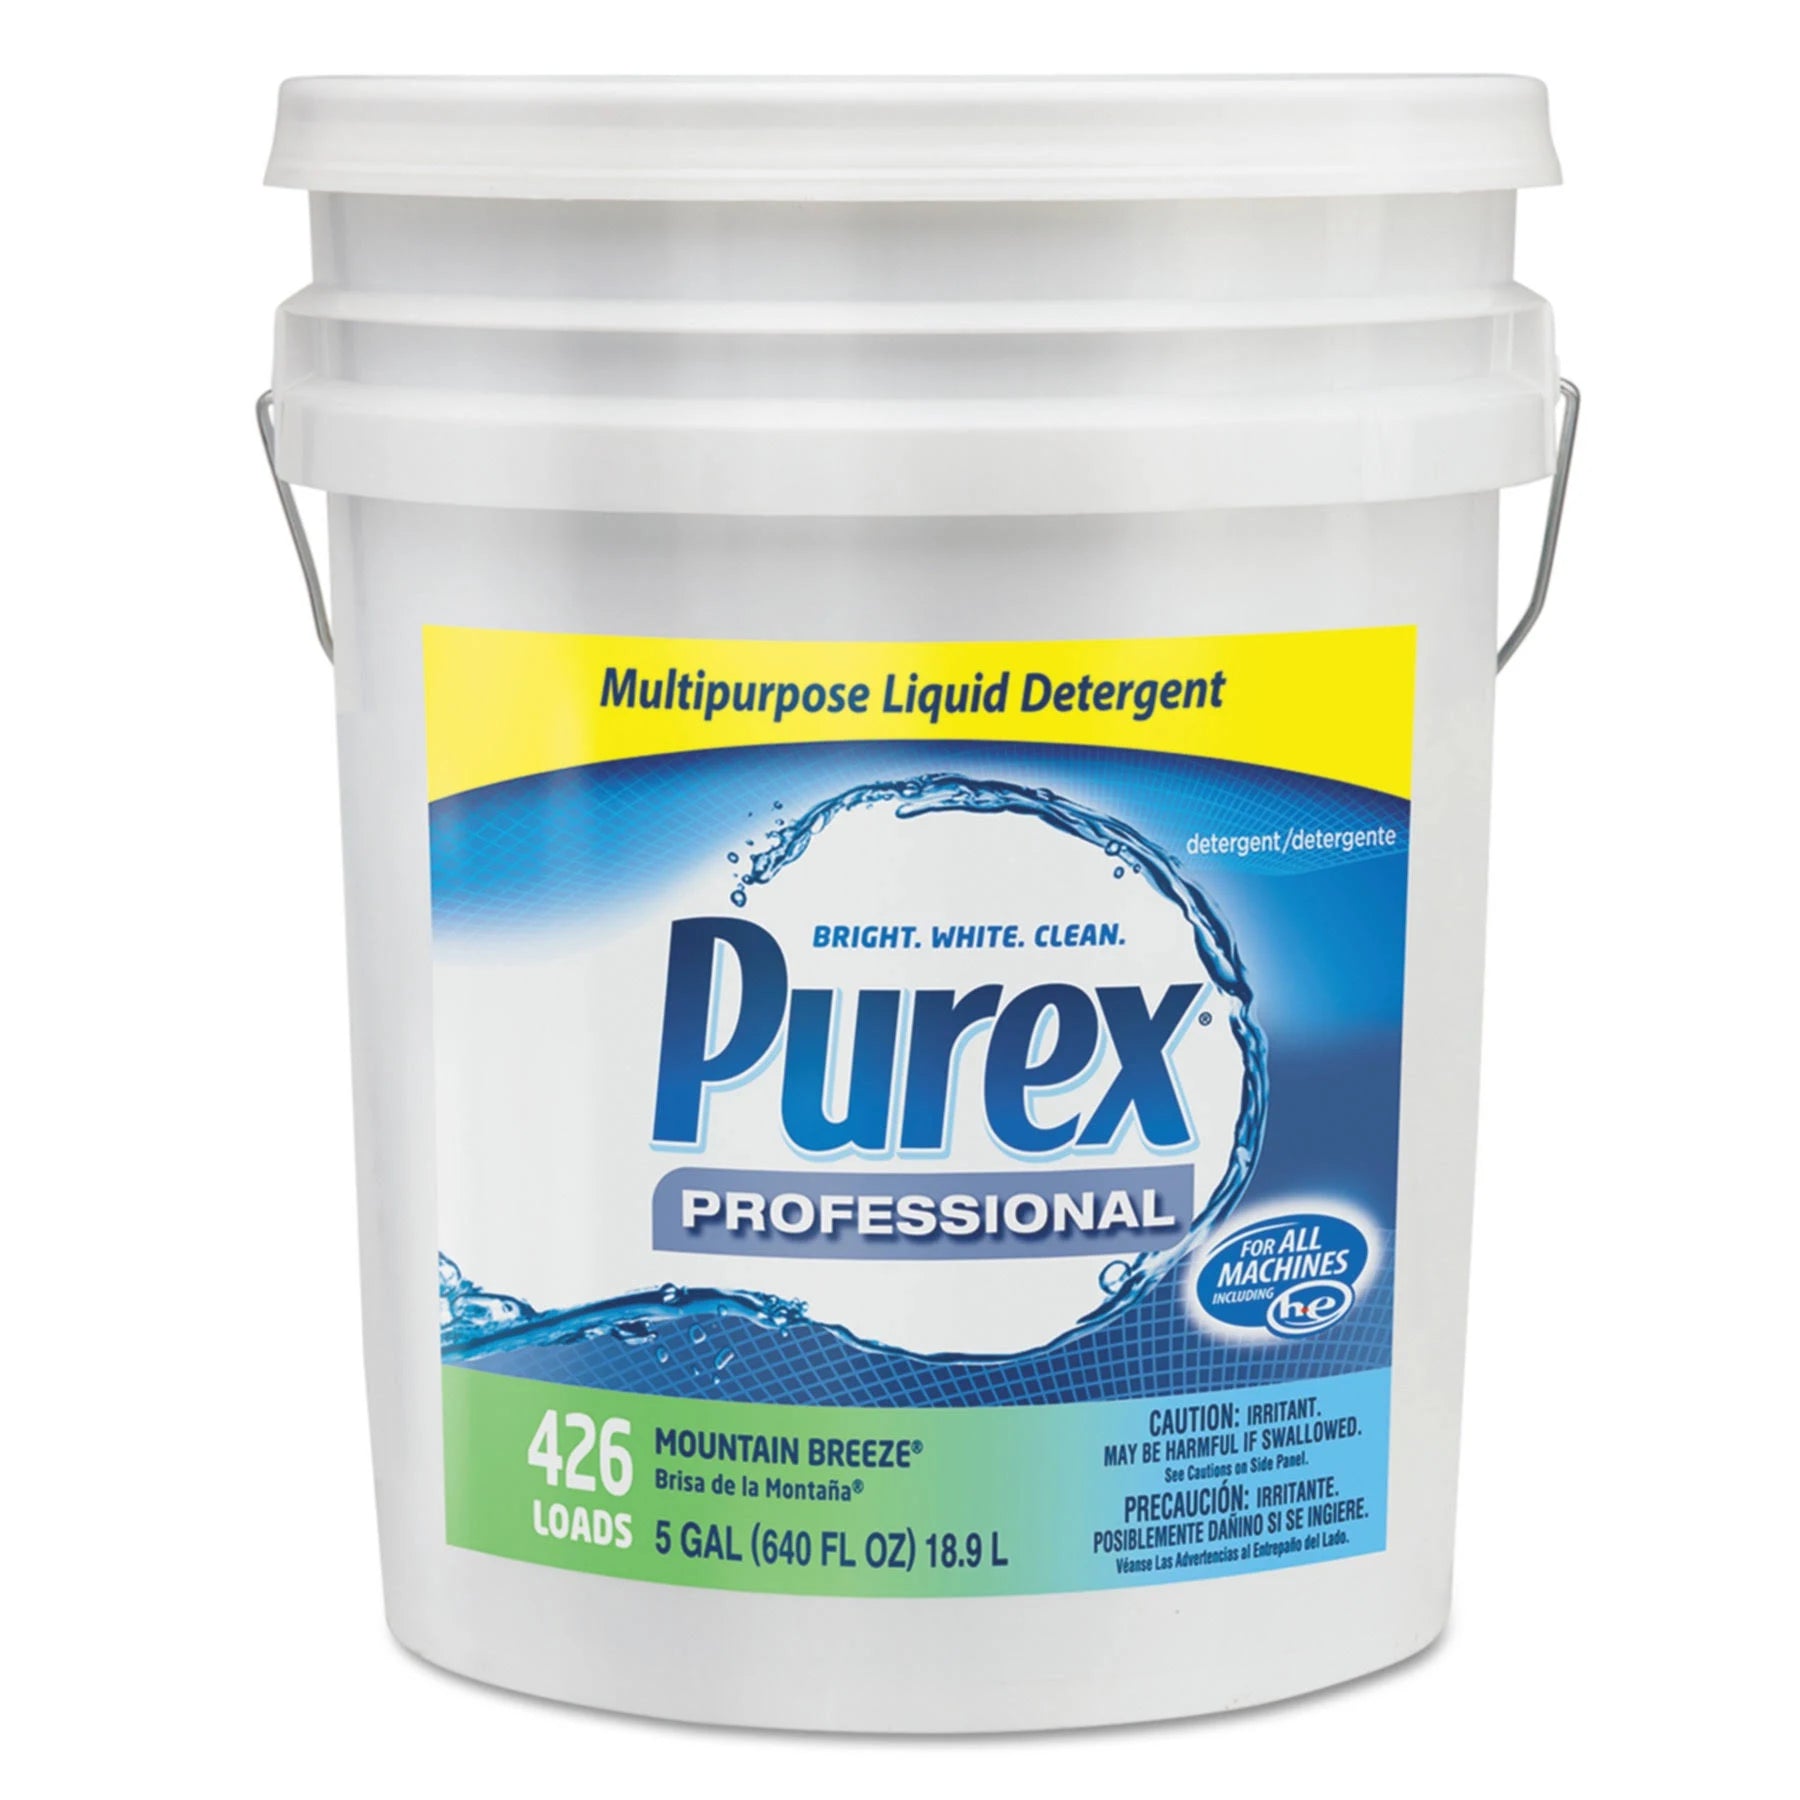 Purex HE Liquid Laundry Detergent